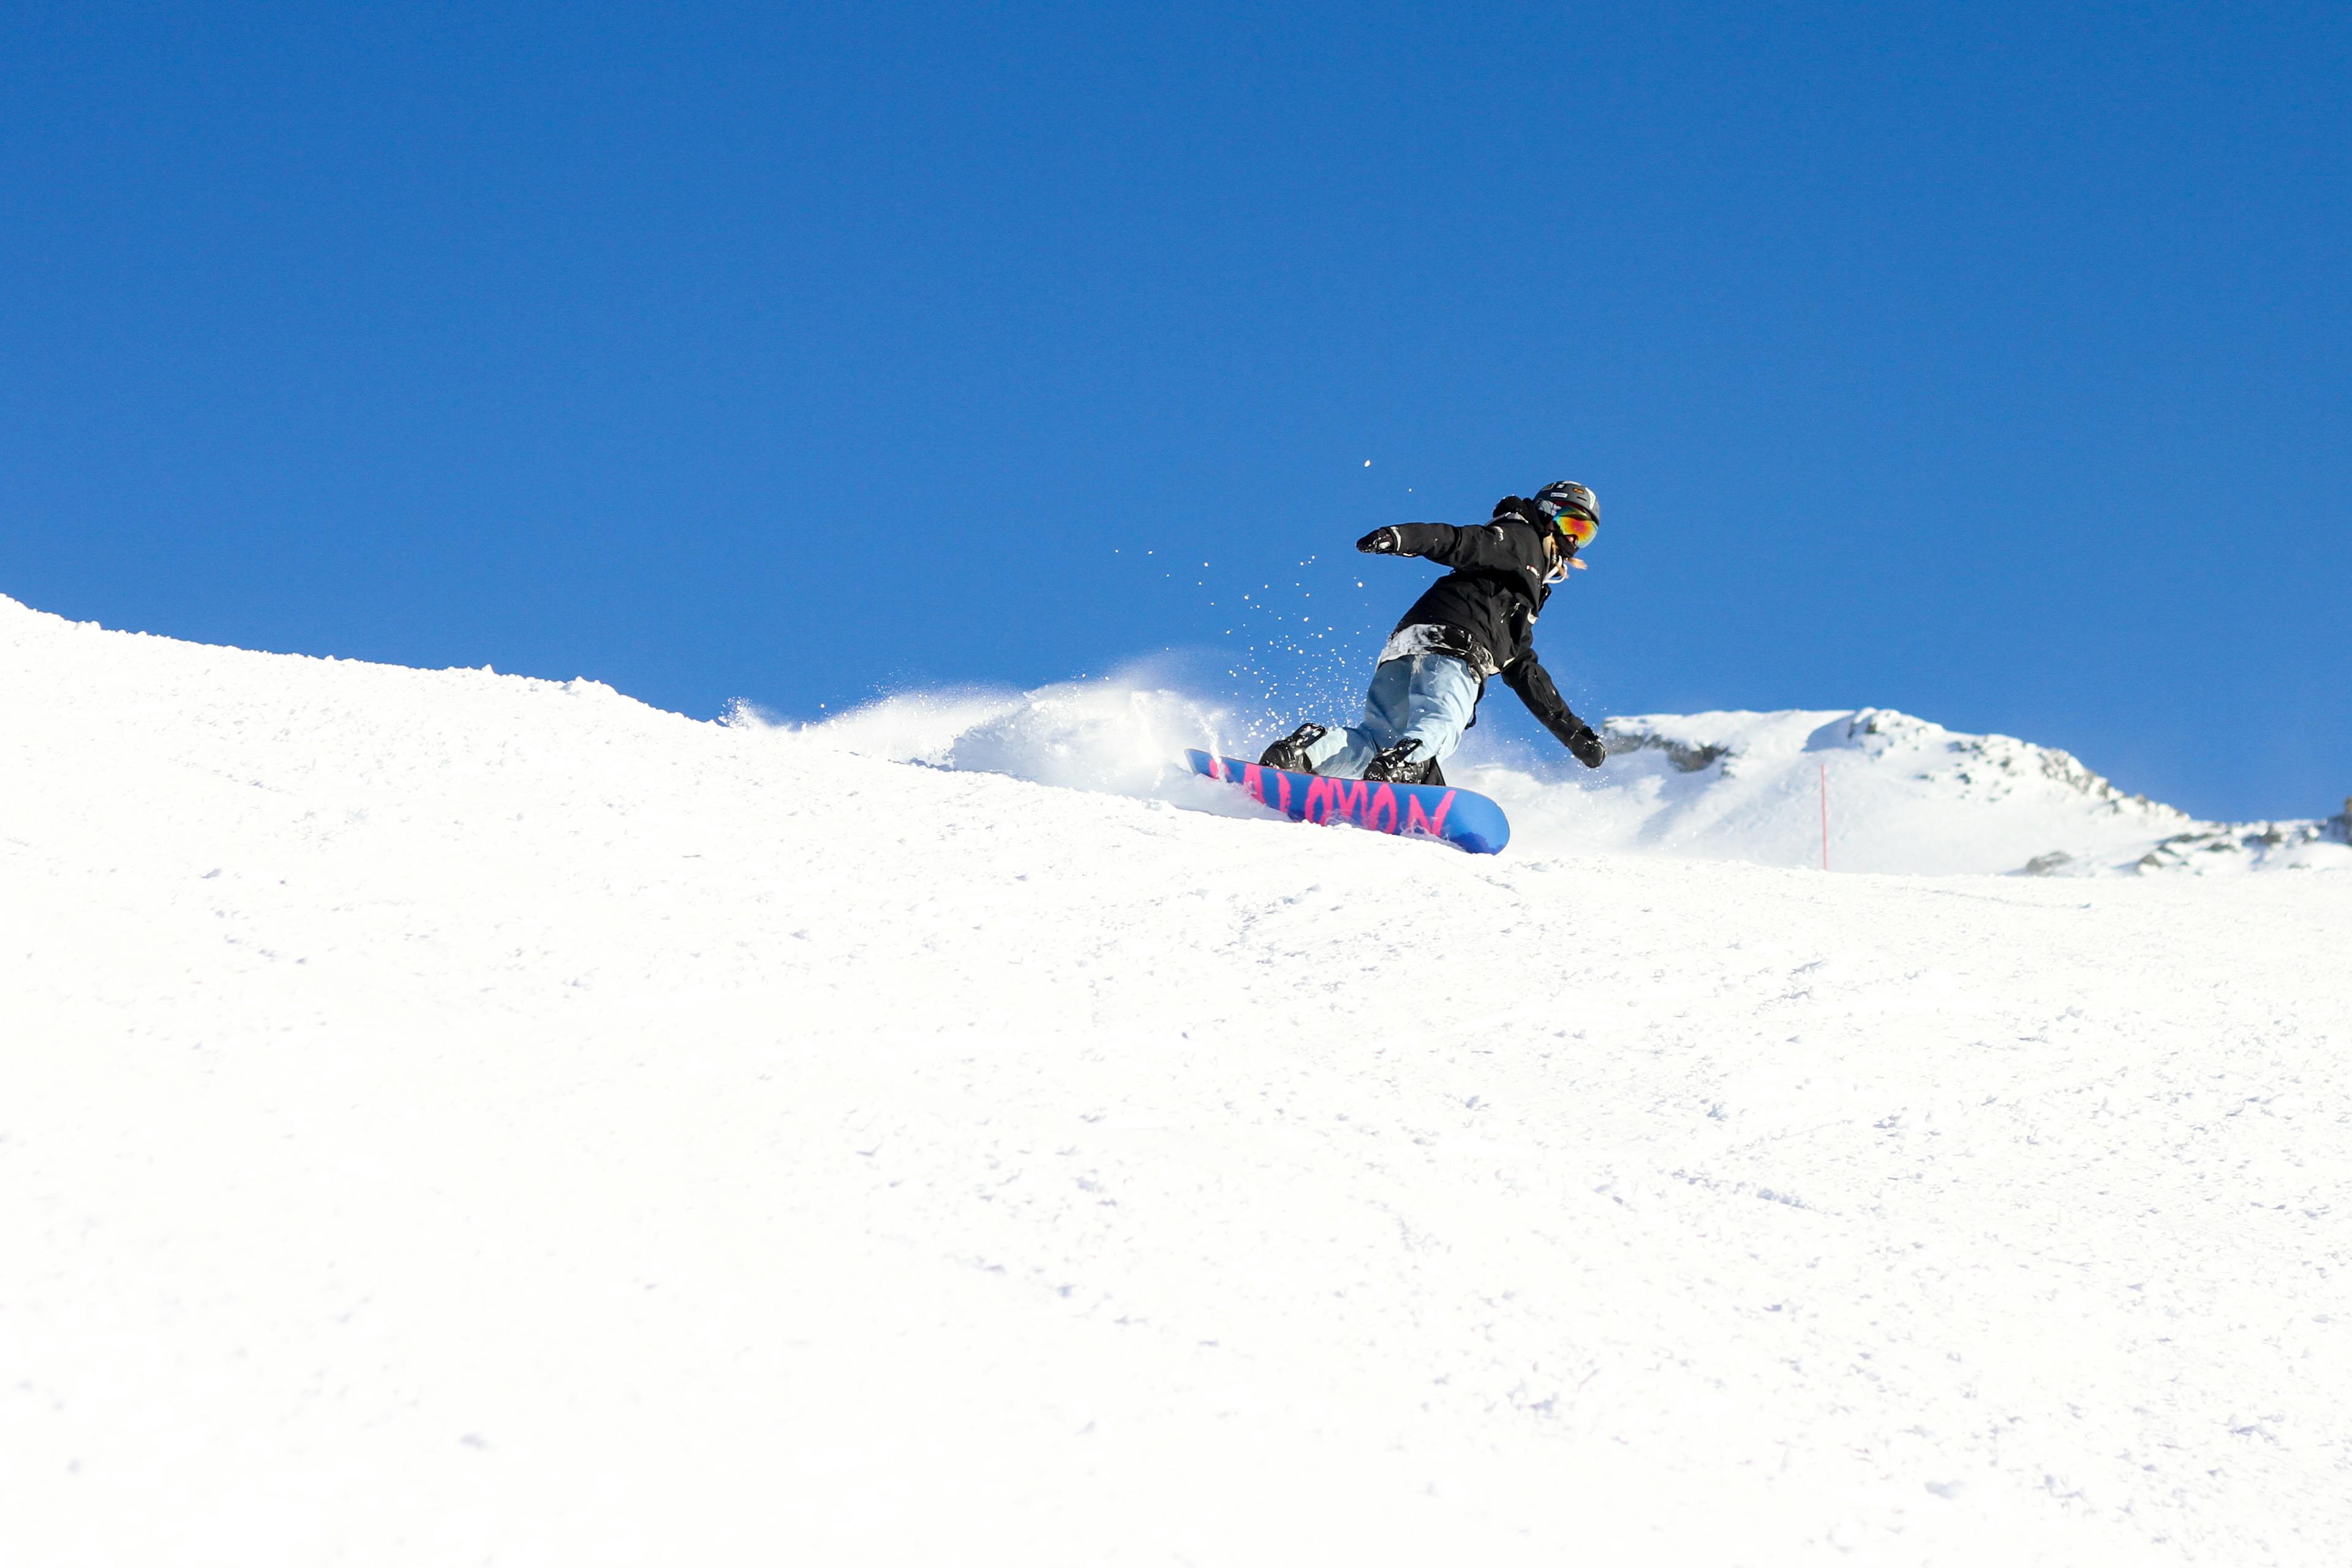 snowboarder carving down ski slope